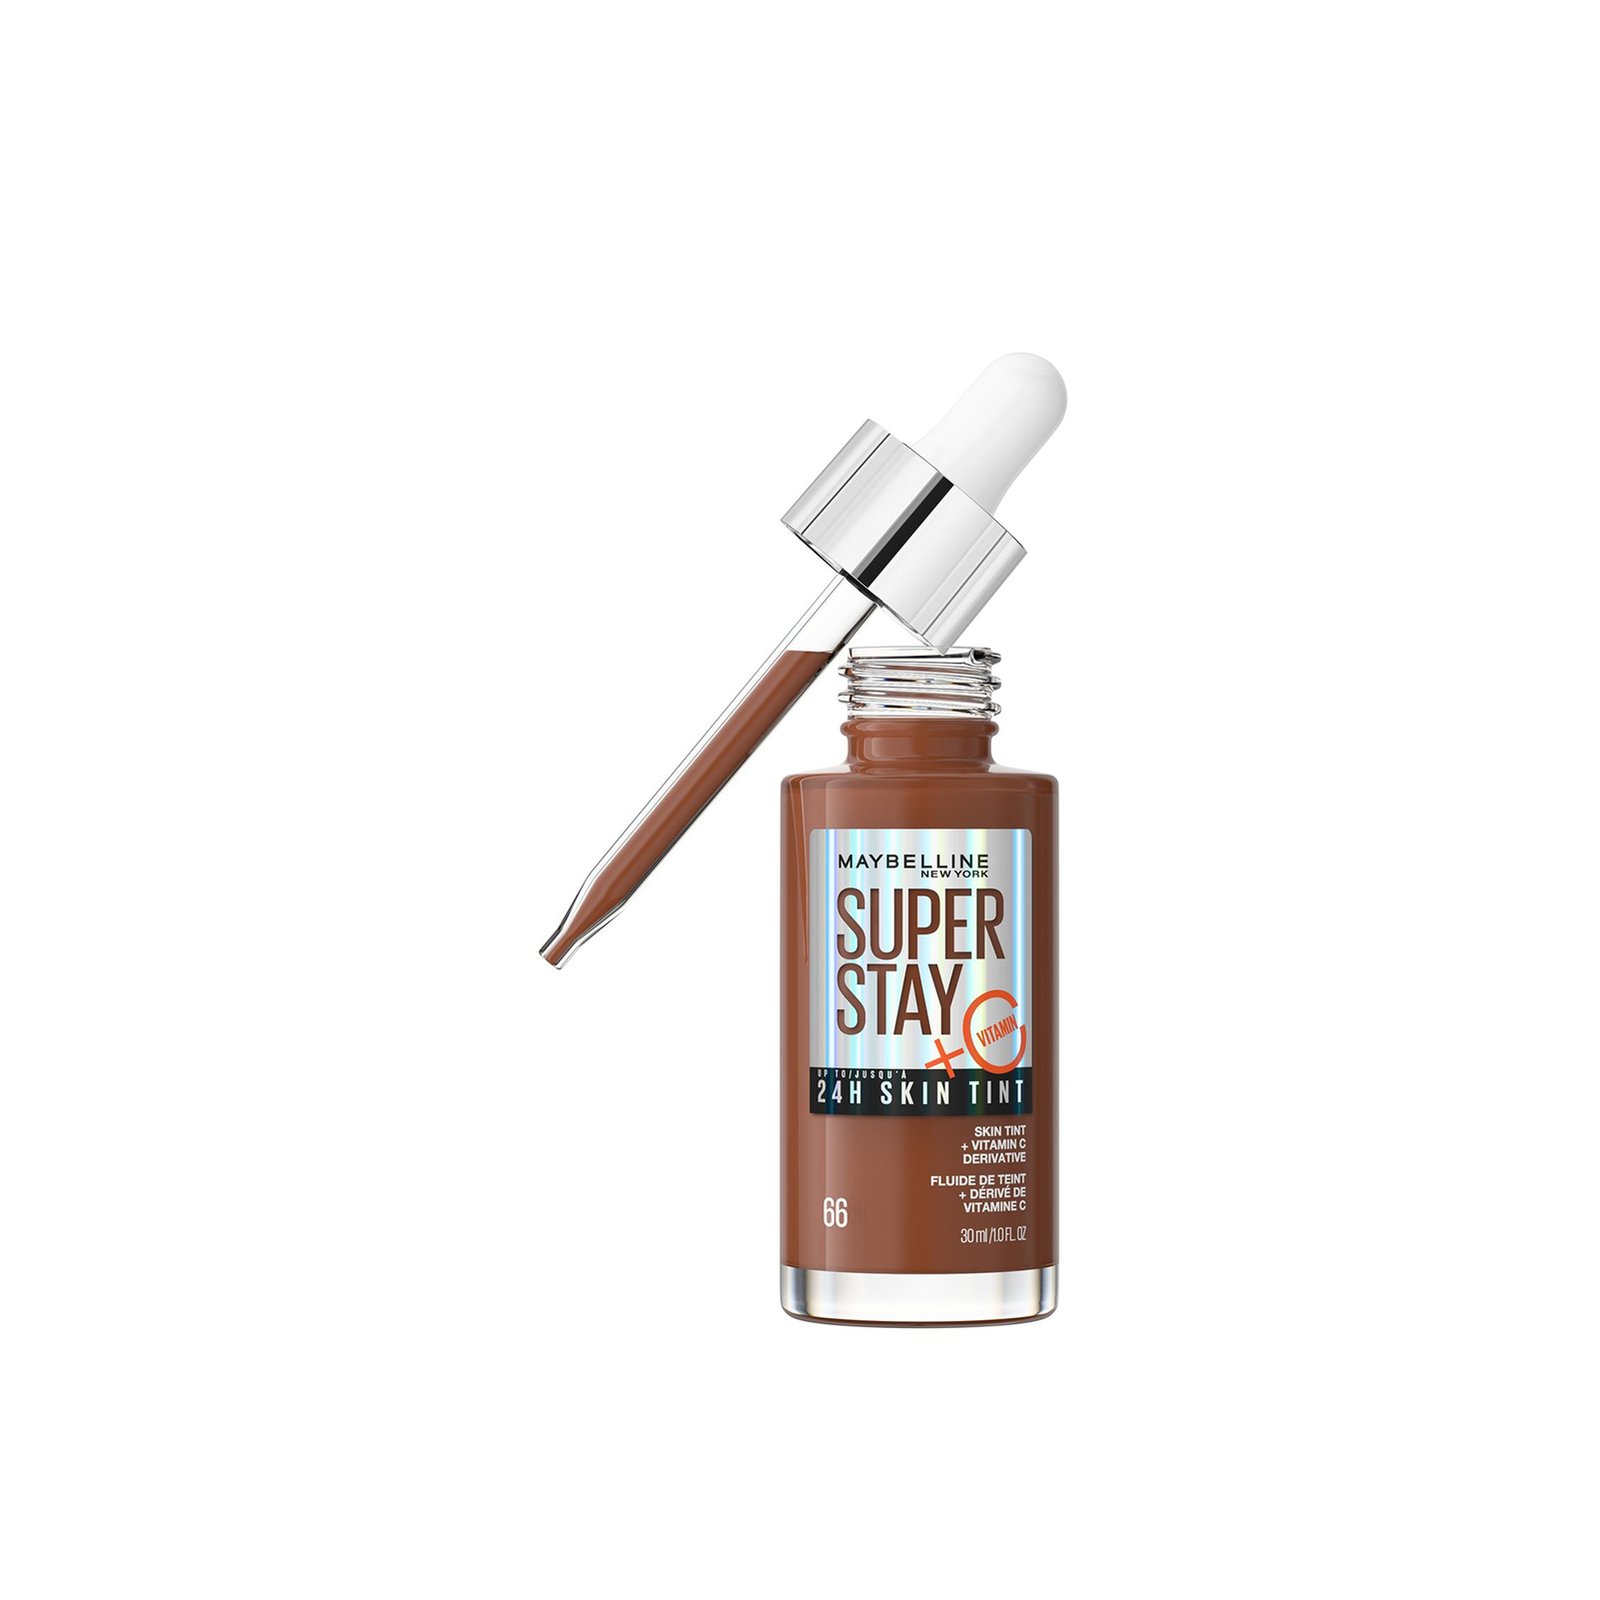 Maybelline Super Stay 24H Skin Tint Foundation 66 30ml (1.0 fl oz)